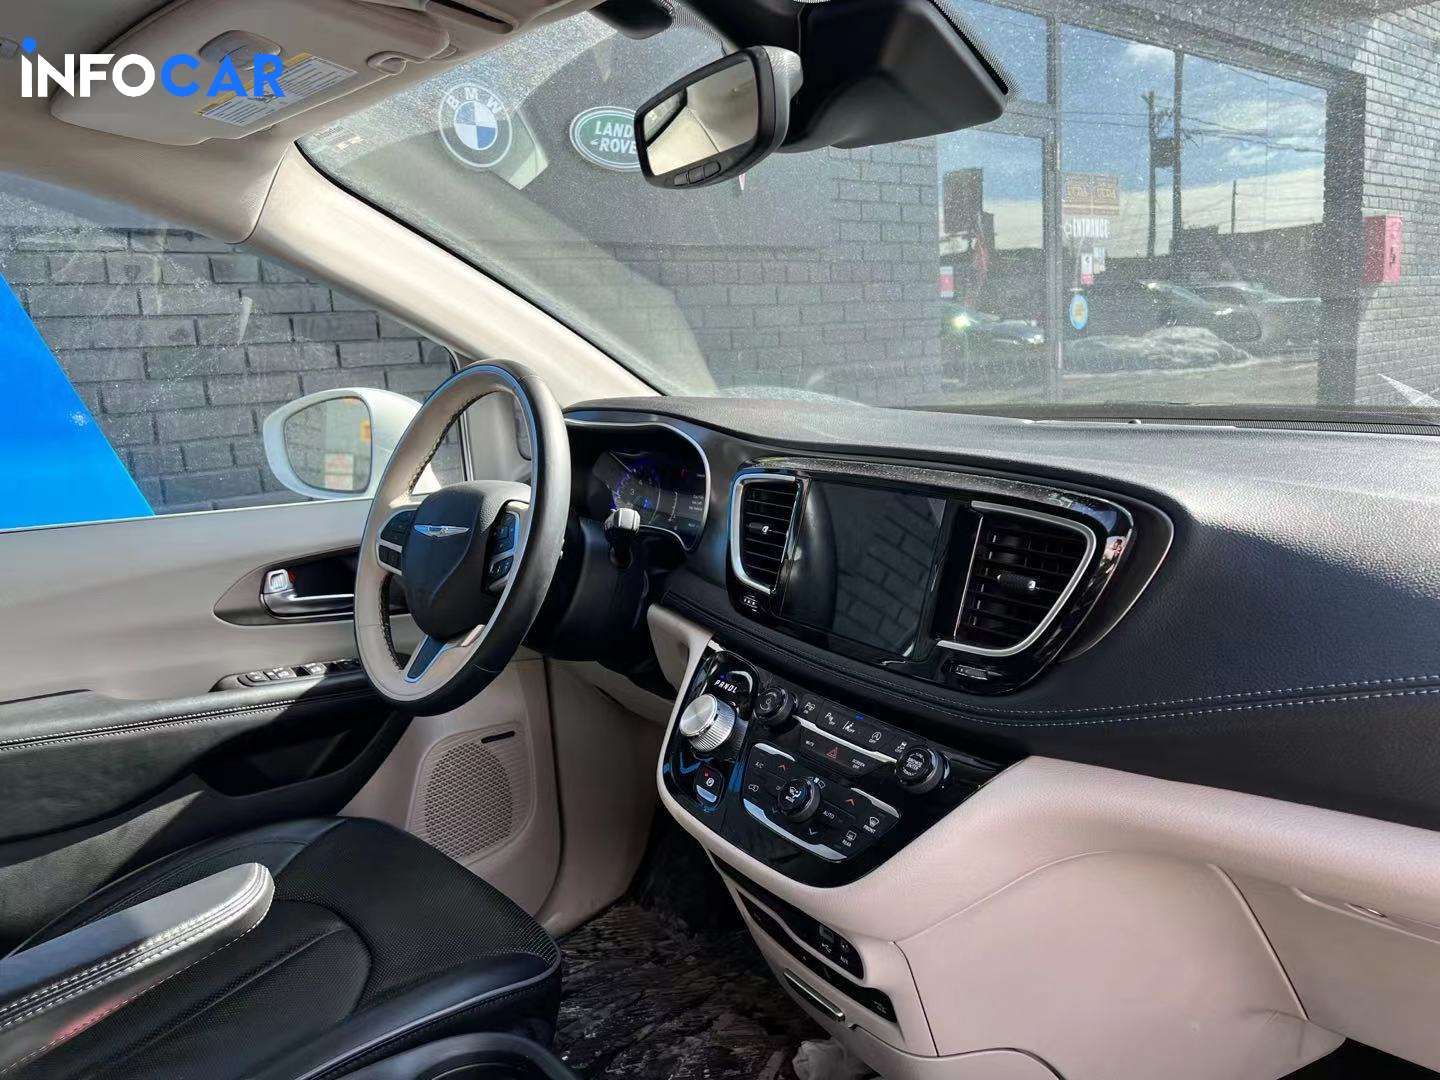 2019 Chrysler Pacifica null - INFOCAR - Toronto Auto Trading Platform